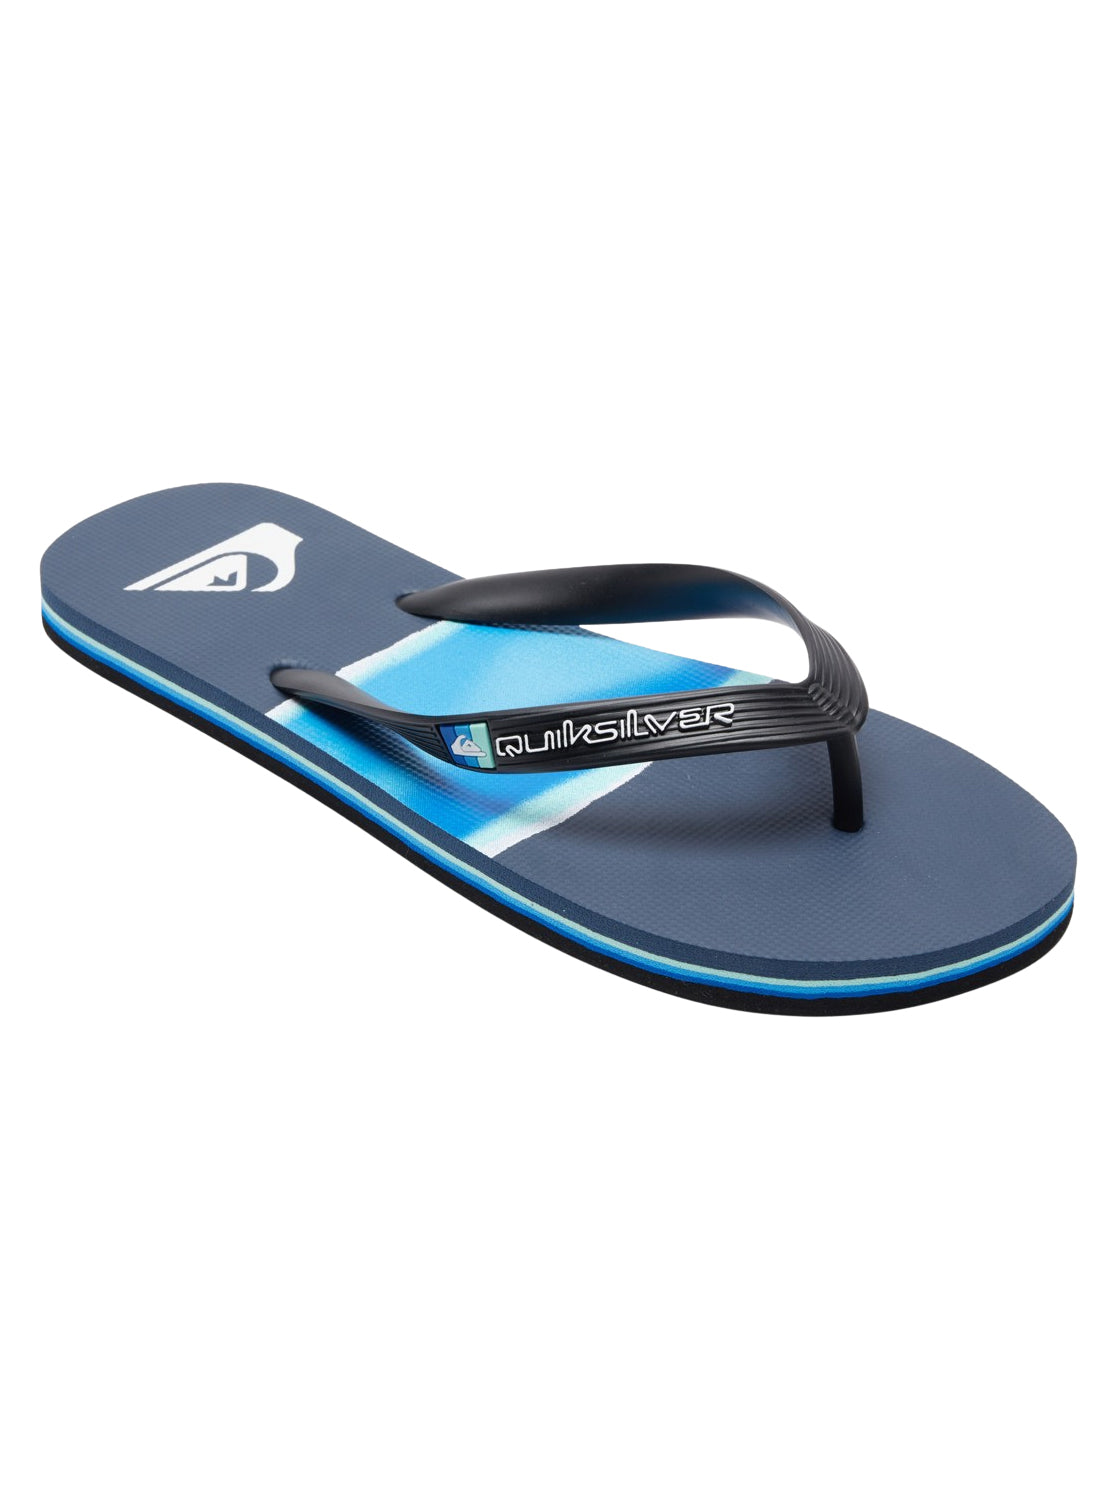 Quiksilver Molokai Airbrushed Navy Flip Flops Beach Sandals